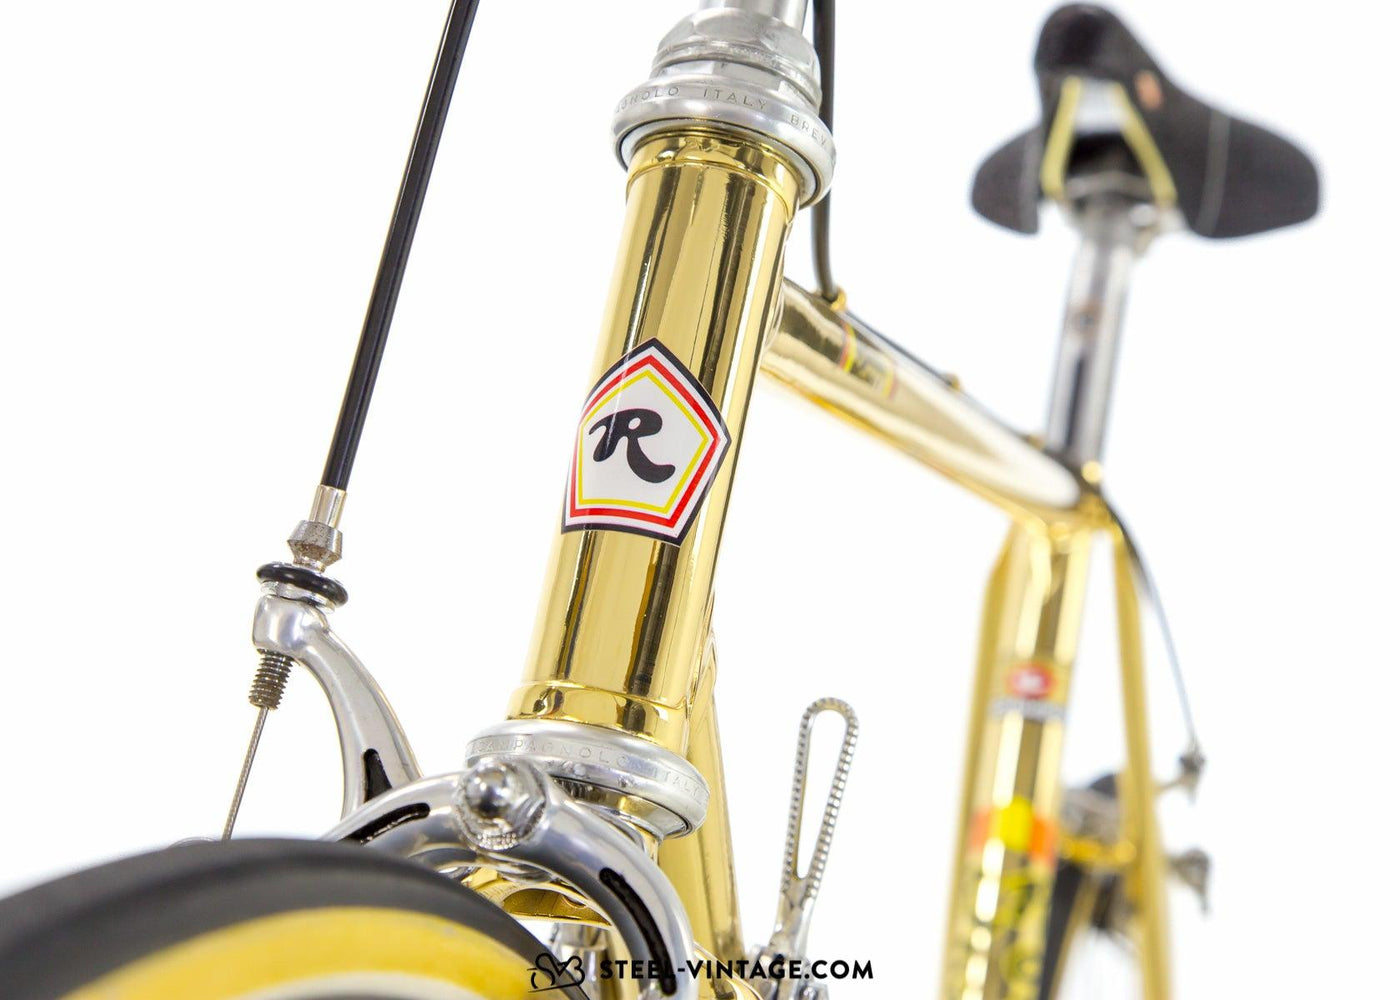 Rossin Super Record Oro Prestigious Road Bicycle 1970s - Steel Vintage Bikes